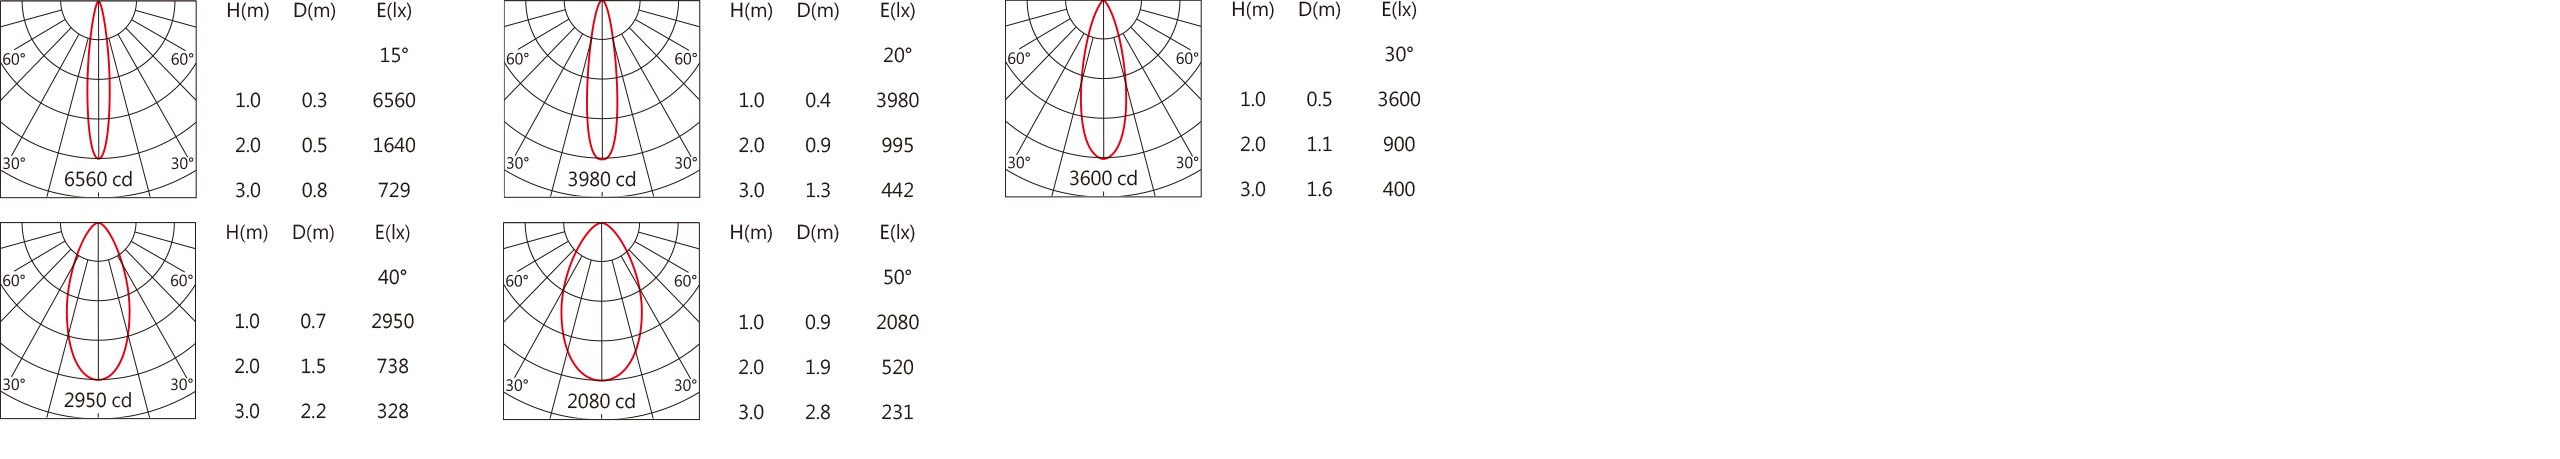 OBA-113R Light distribution.jpg